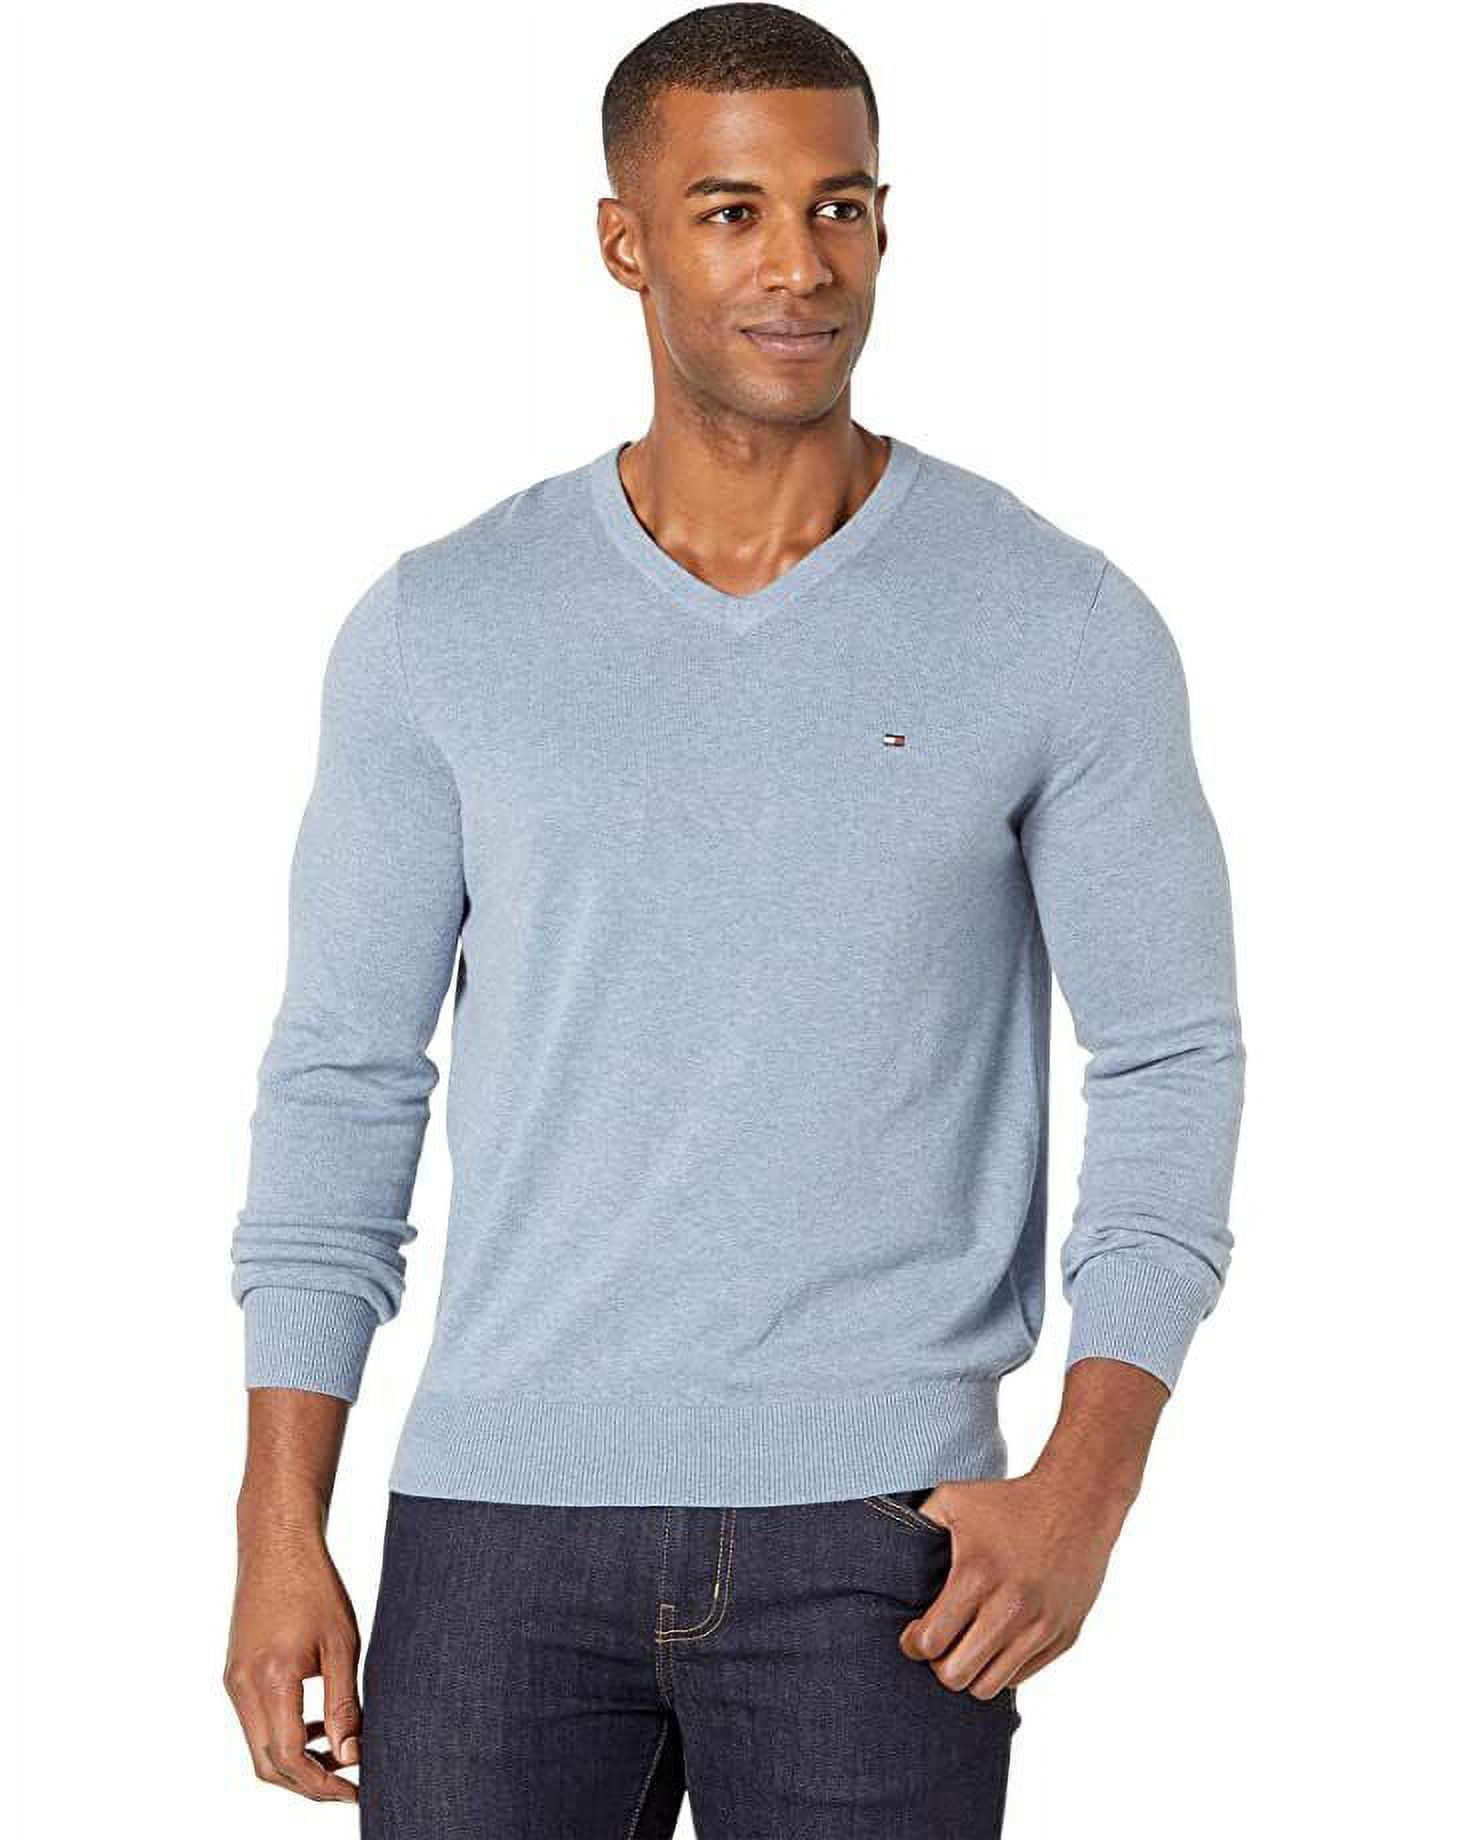 Tommy Hilfiger Men's Signature Solid V-Neck Cotton Sweater Captains  Blue-Small